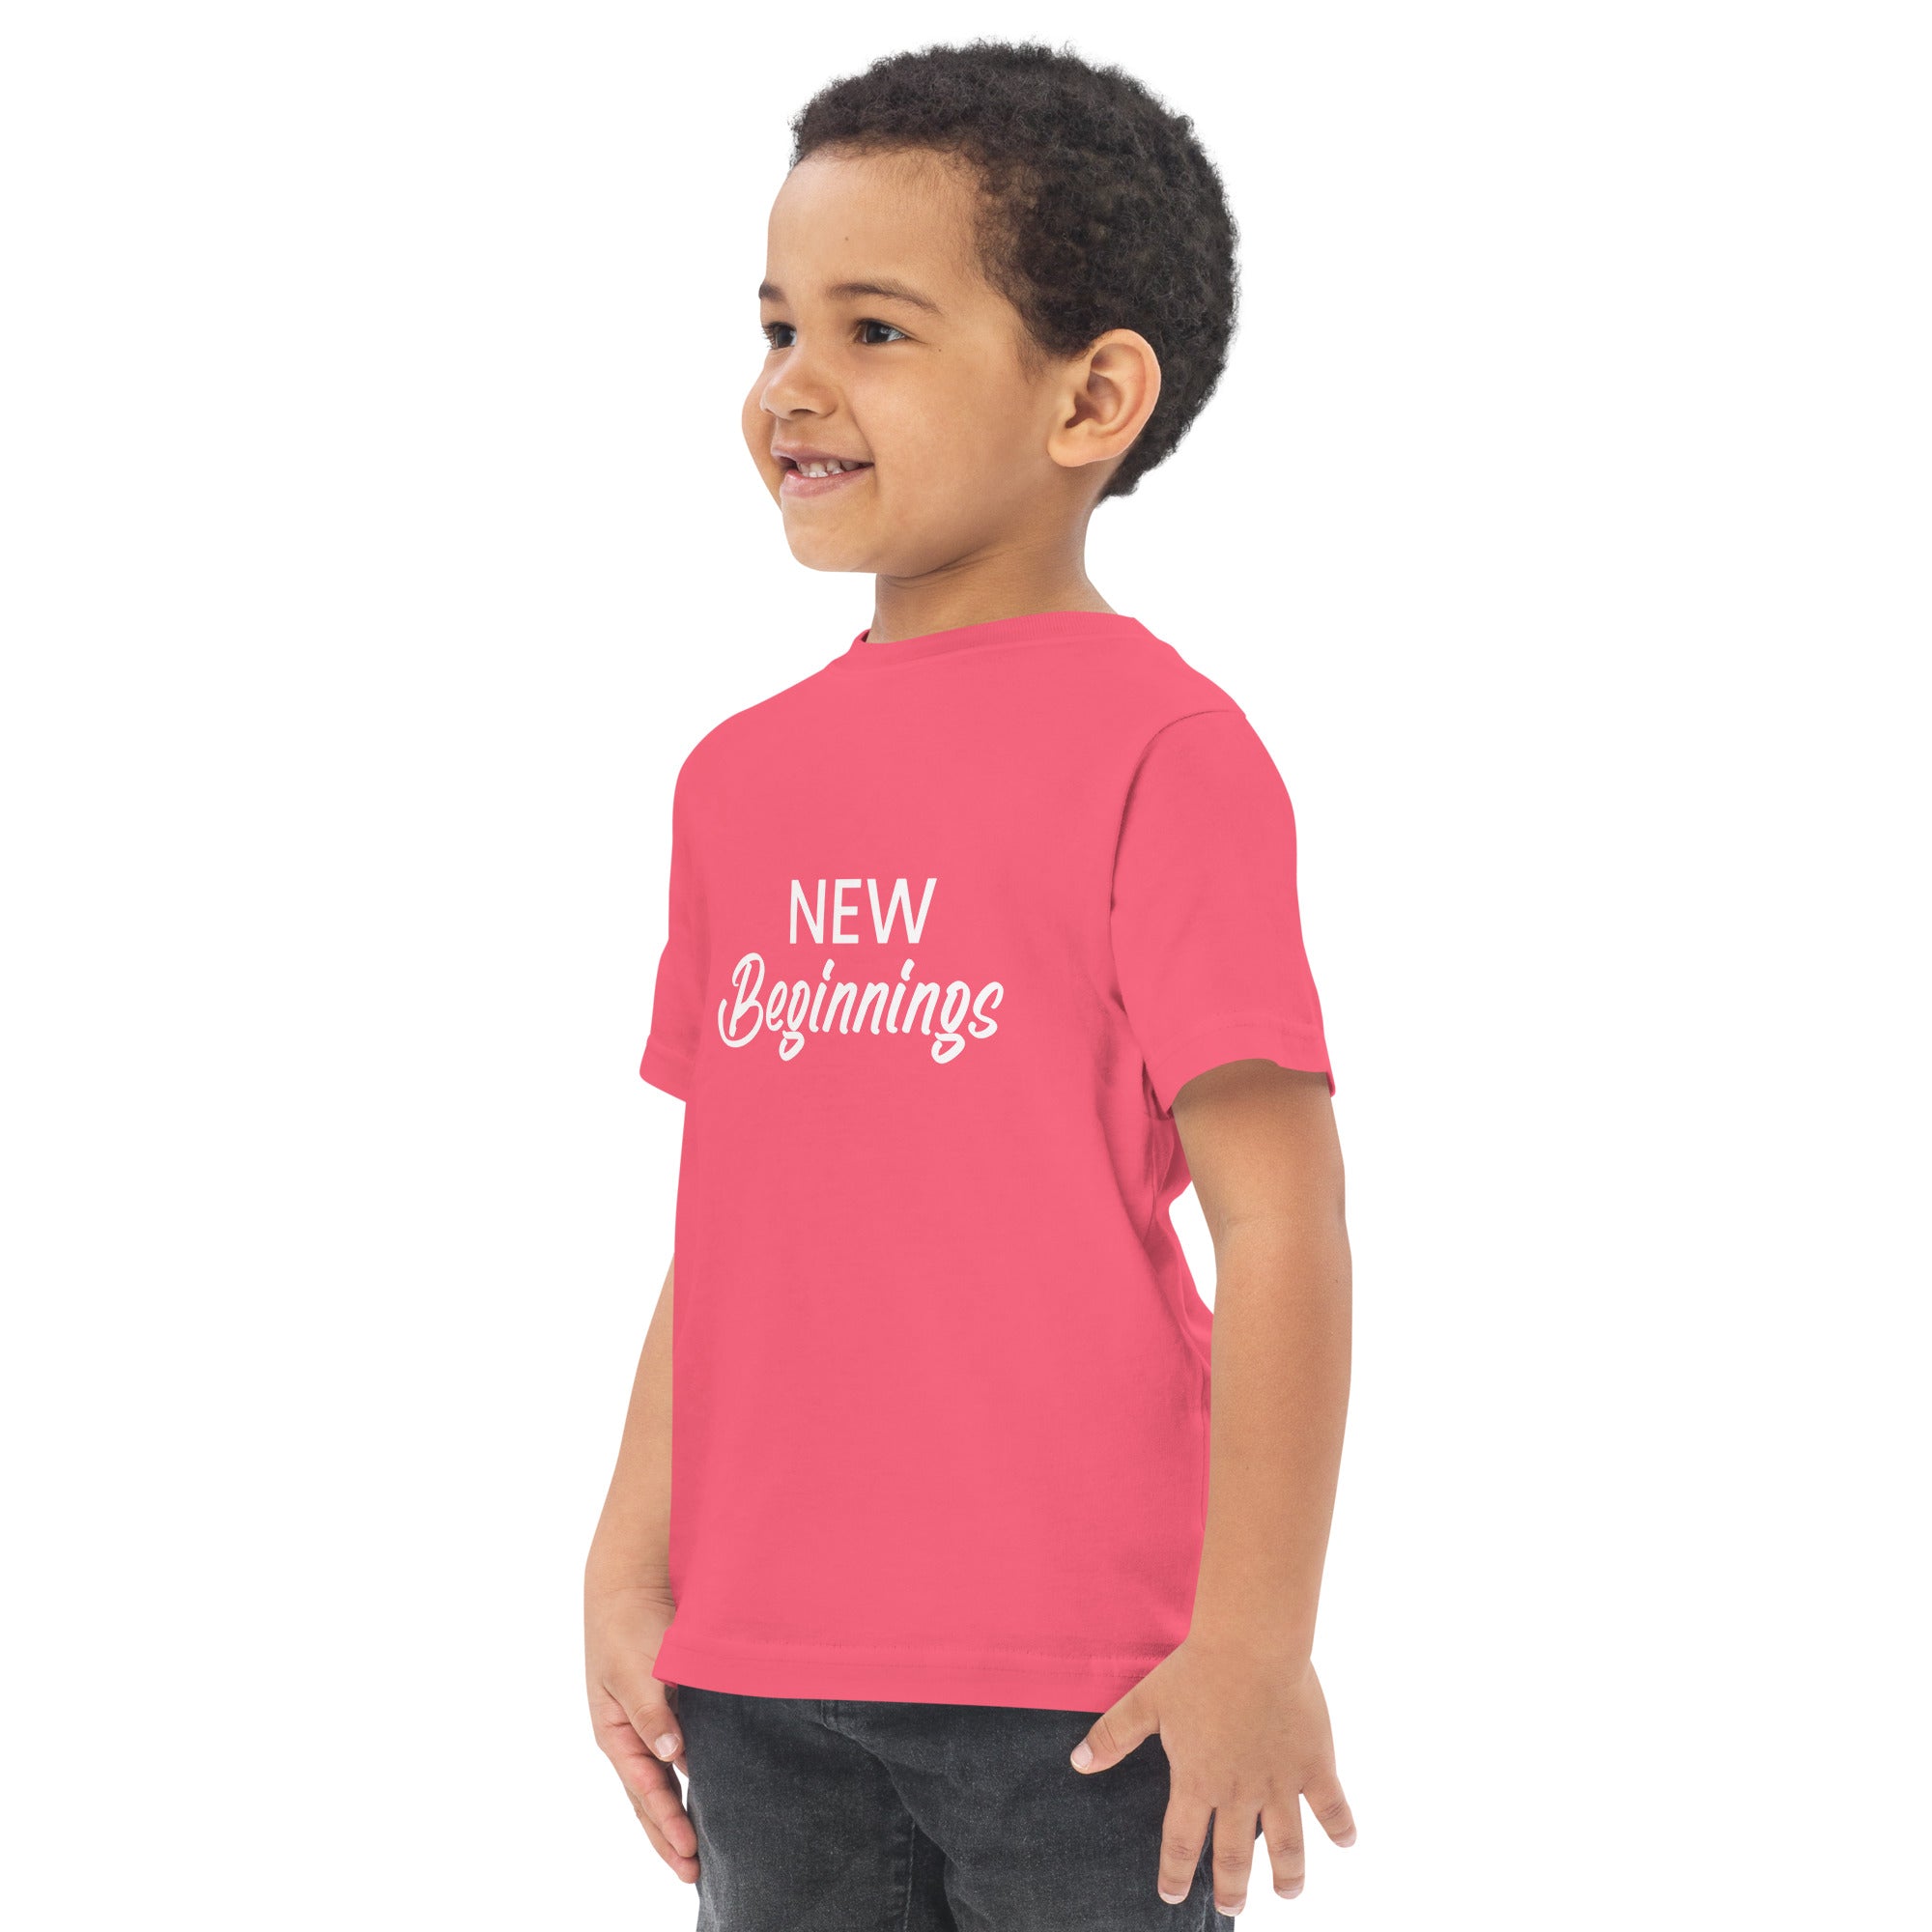 Toddler Jersey T-shirt